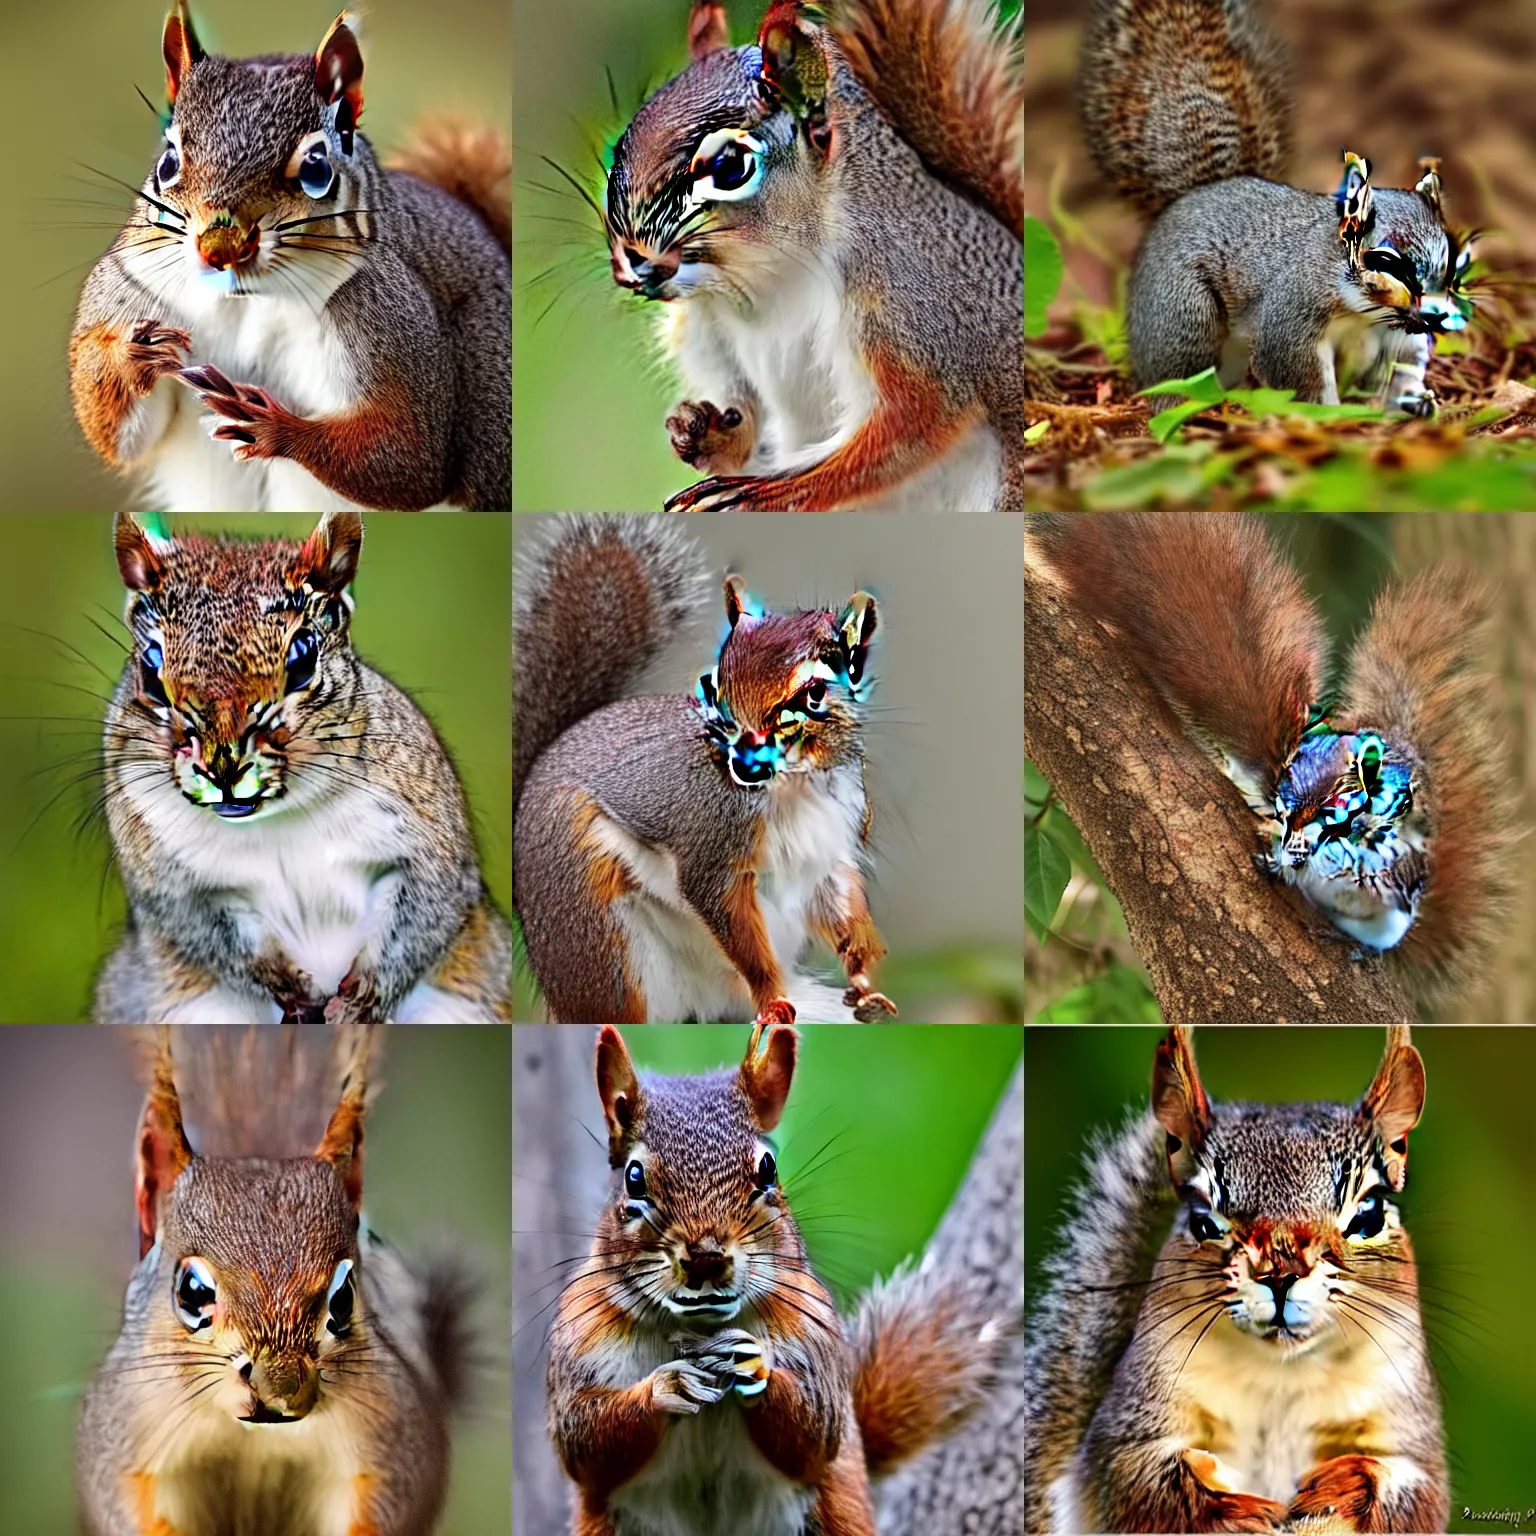 Prompt: portrait of a cute squirrel